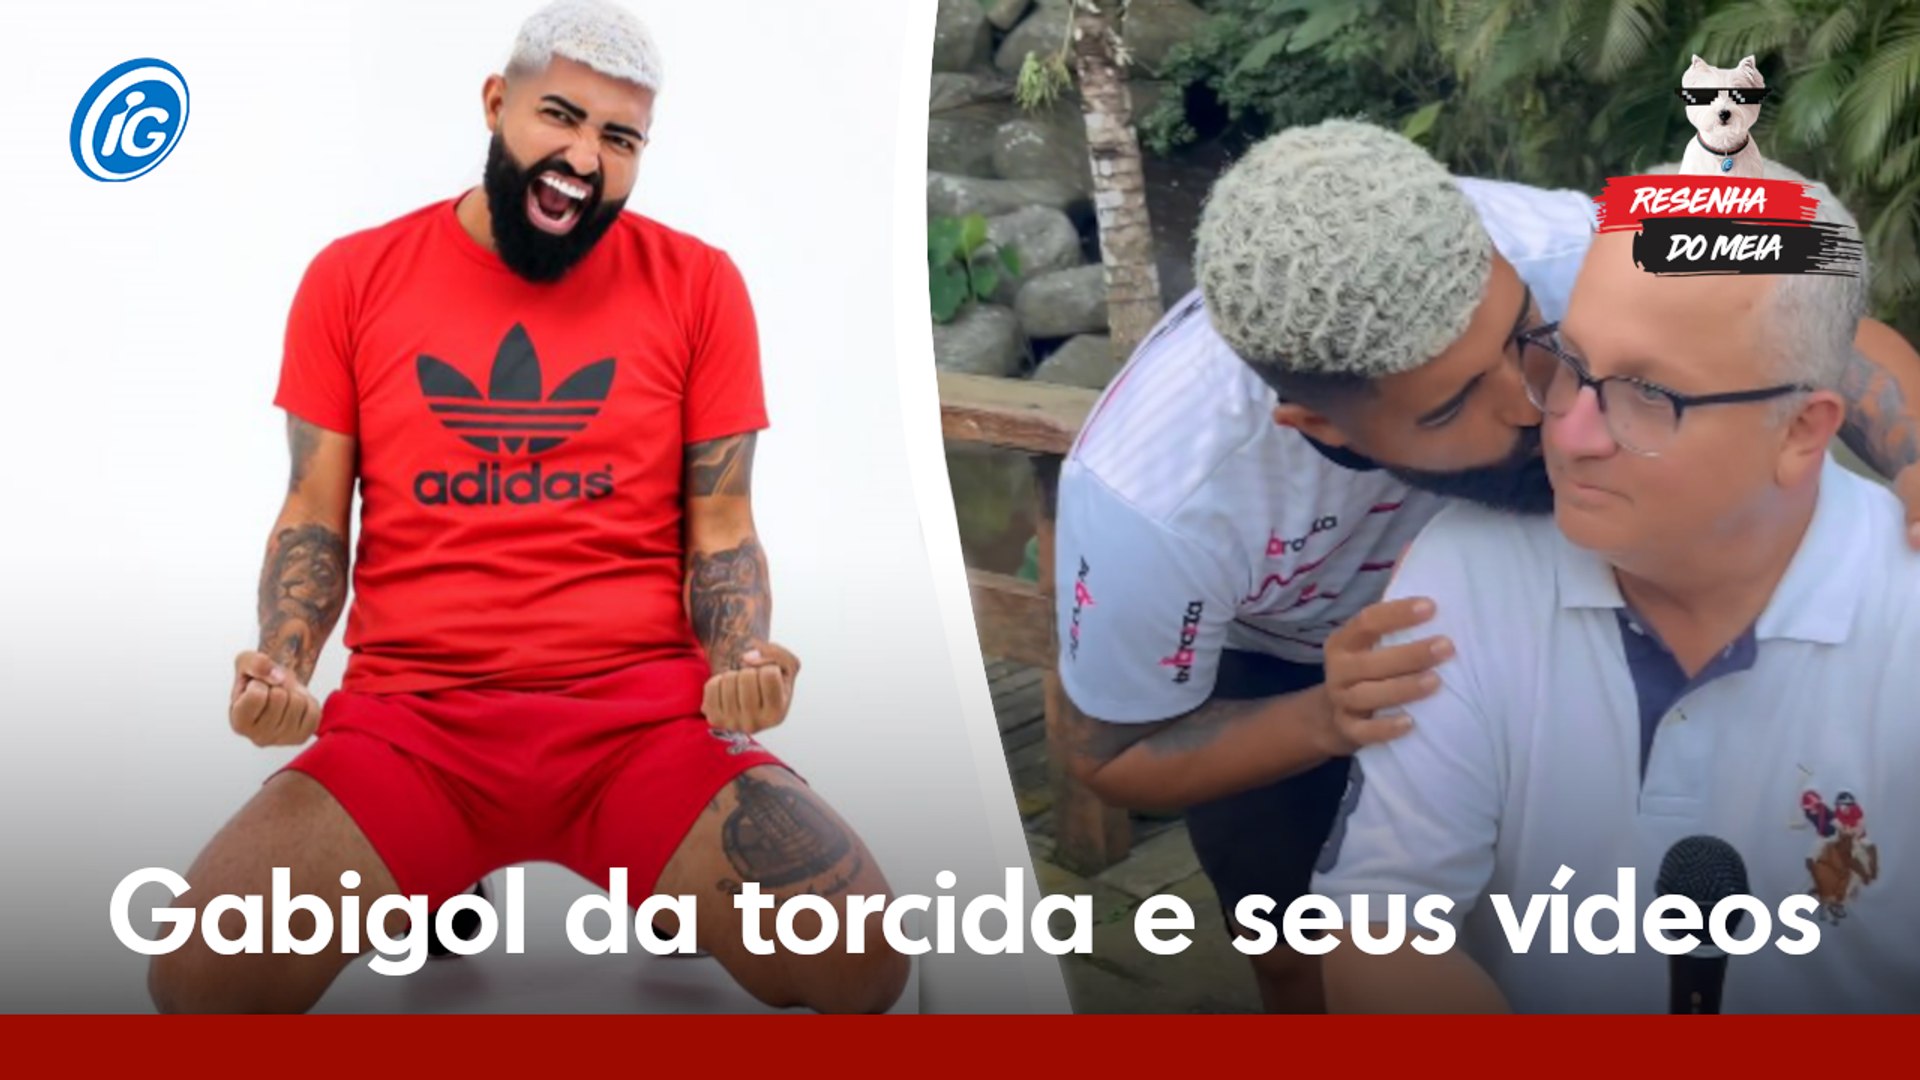 Vídeo: após derrota do Fla, Gabigol manda beijo para Dorival